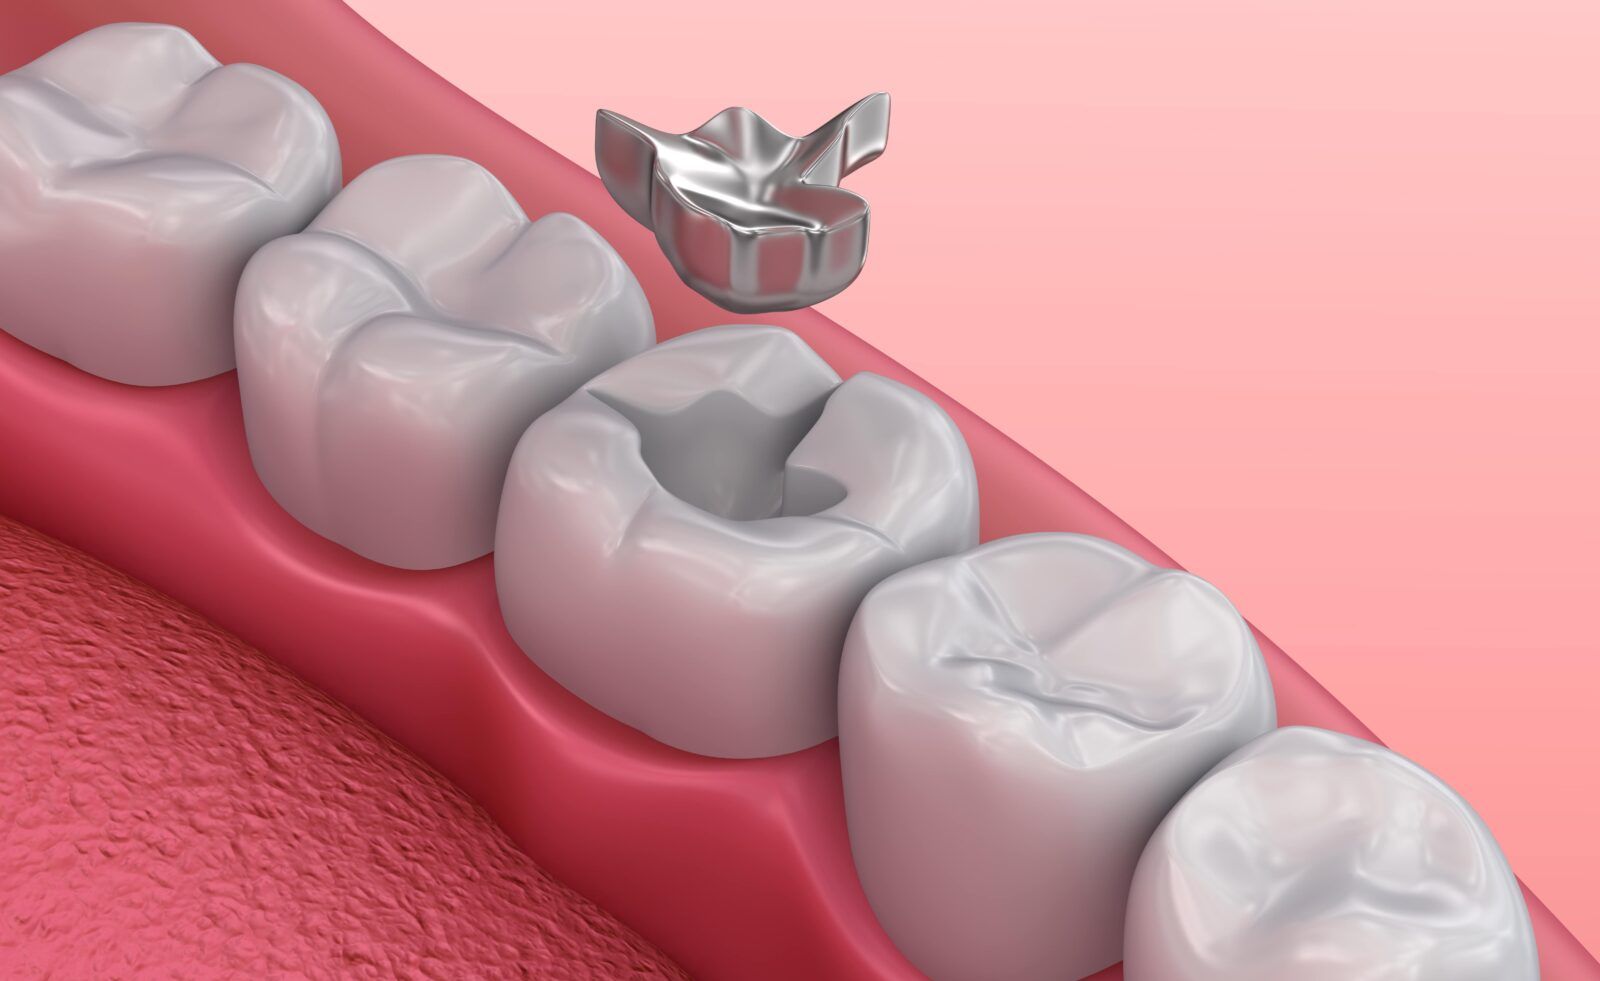 metal filling being placed in molar. dental illustration